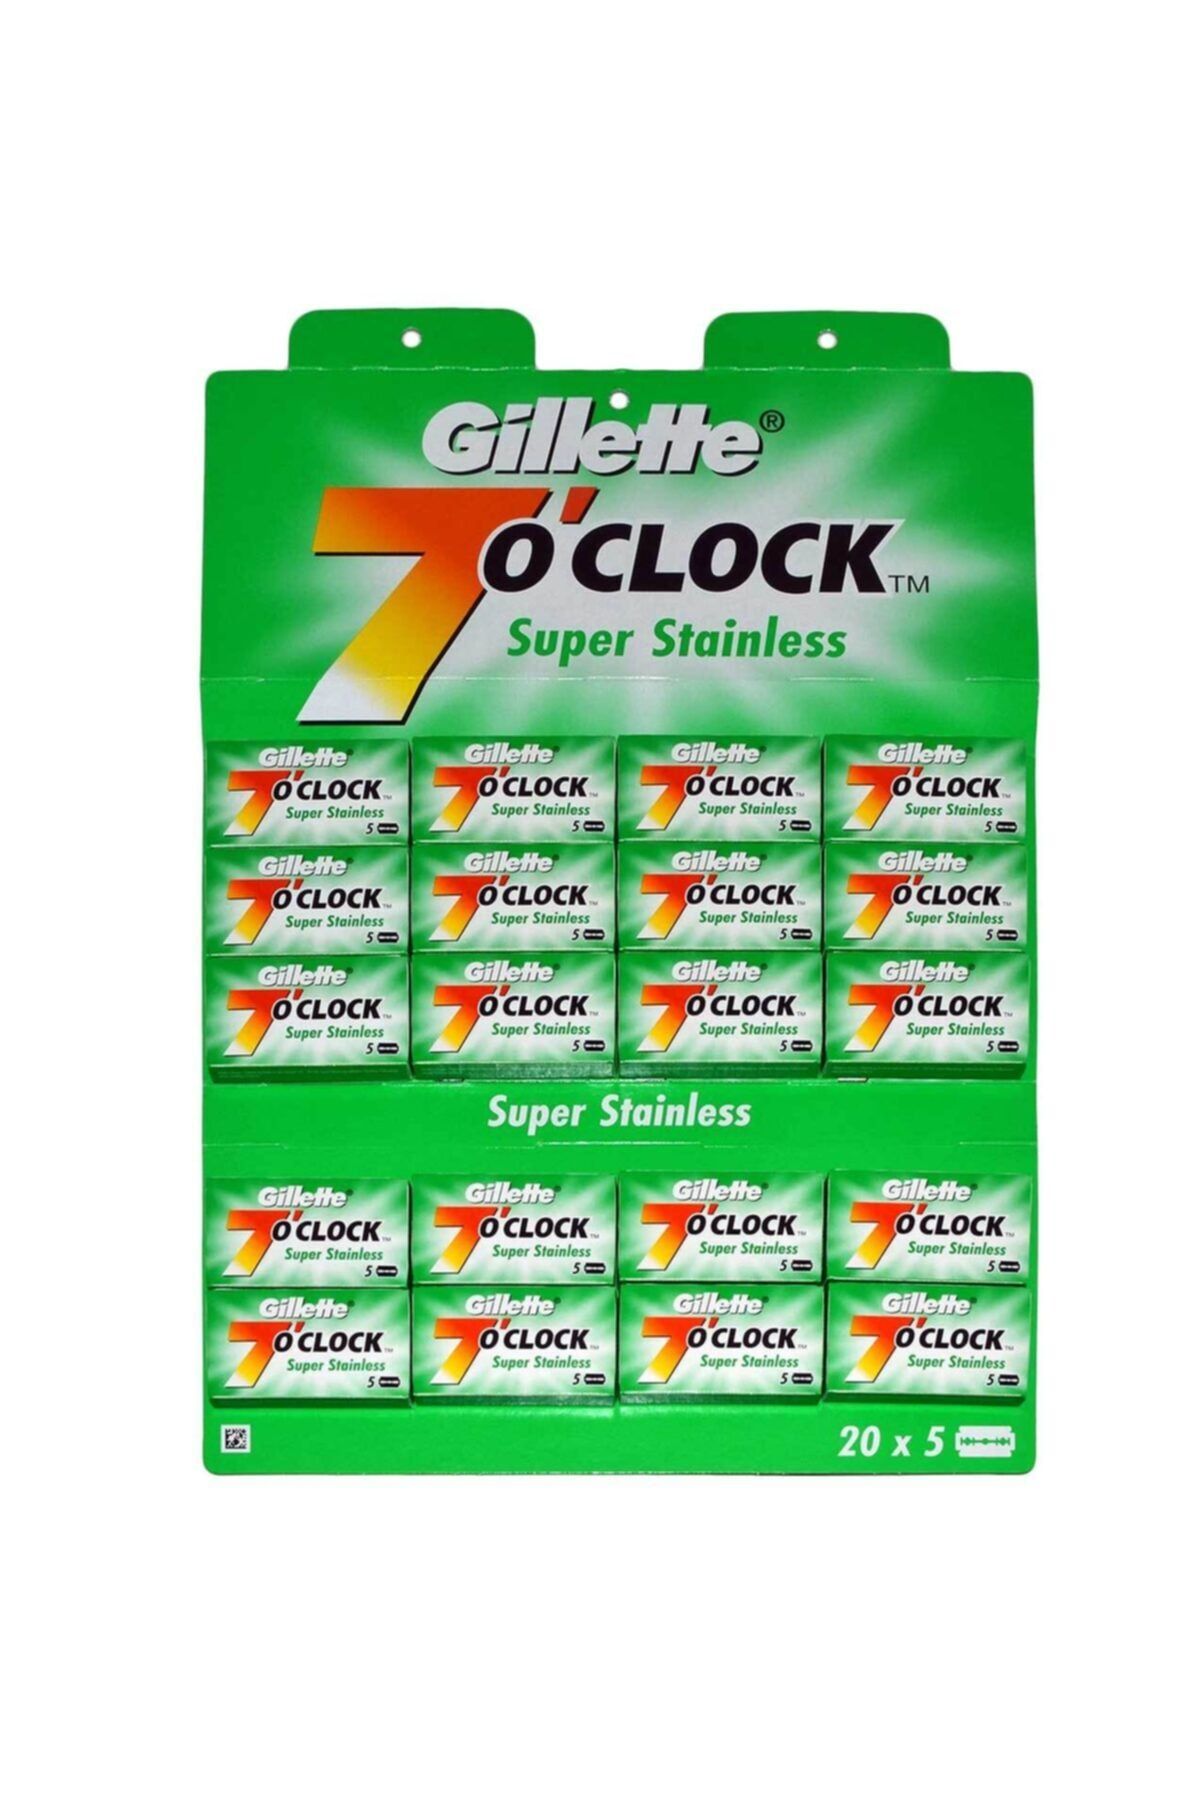 Gillette 7 O'clock Tıraş Bıçağı Çift Kenarlı Jilet 5x20'li (100'lü) Kartela